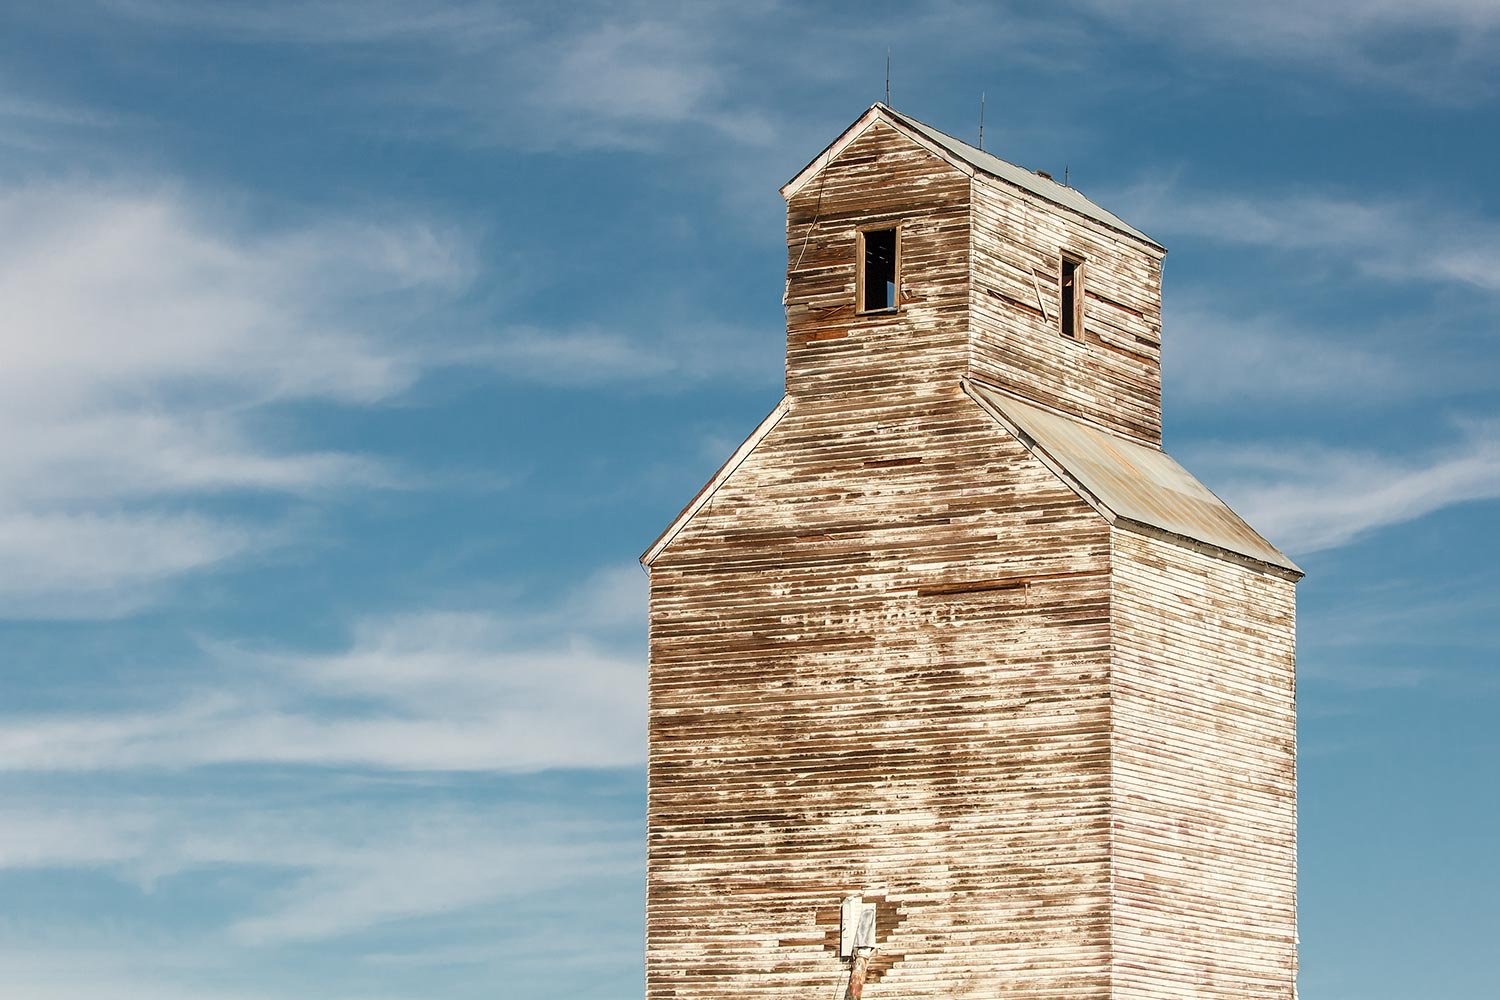  An old grain elevator in Rapelje, Montana.   → Buy a Print   or   License Photo   